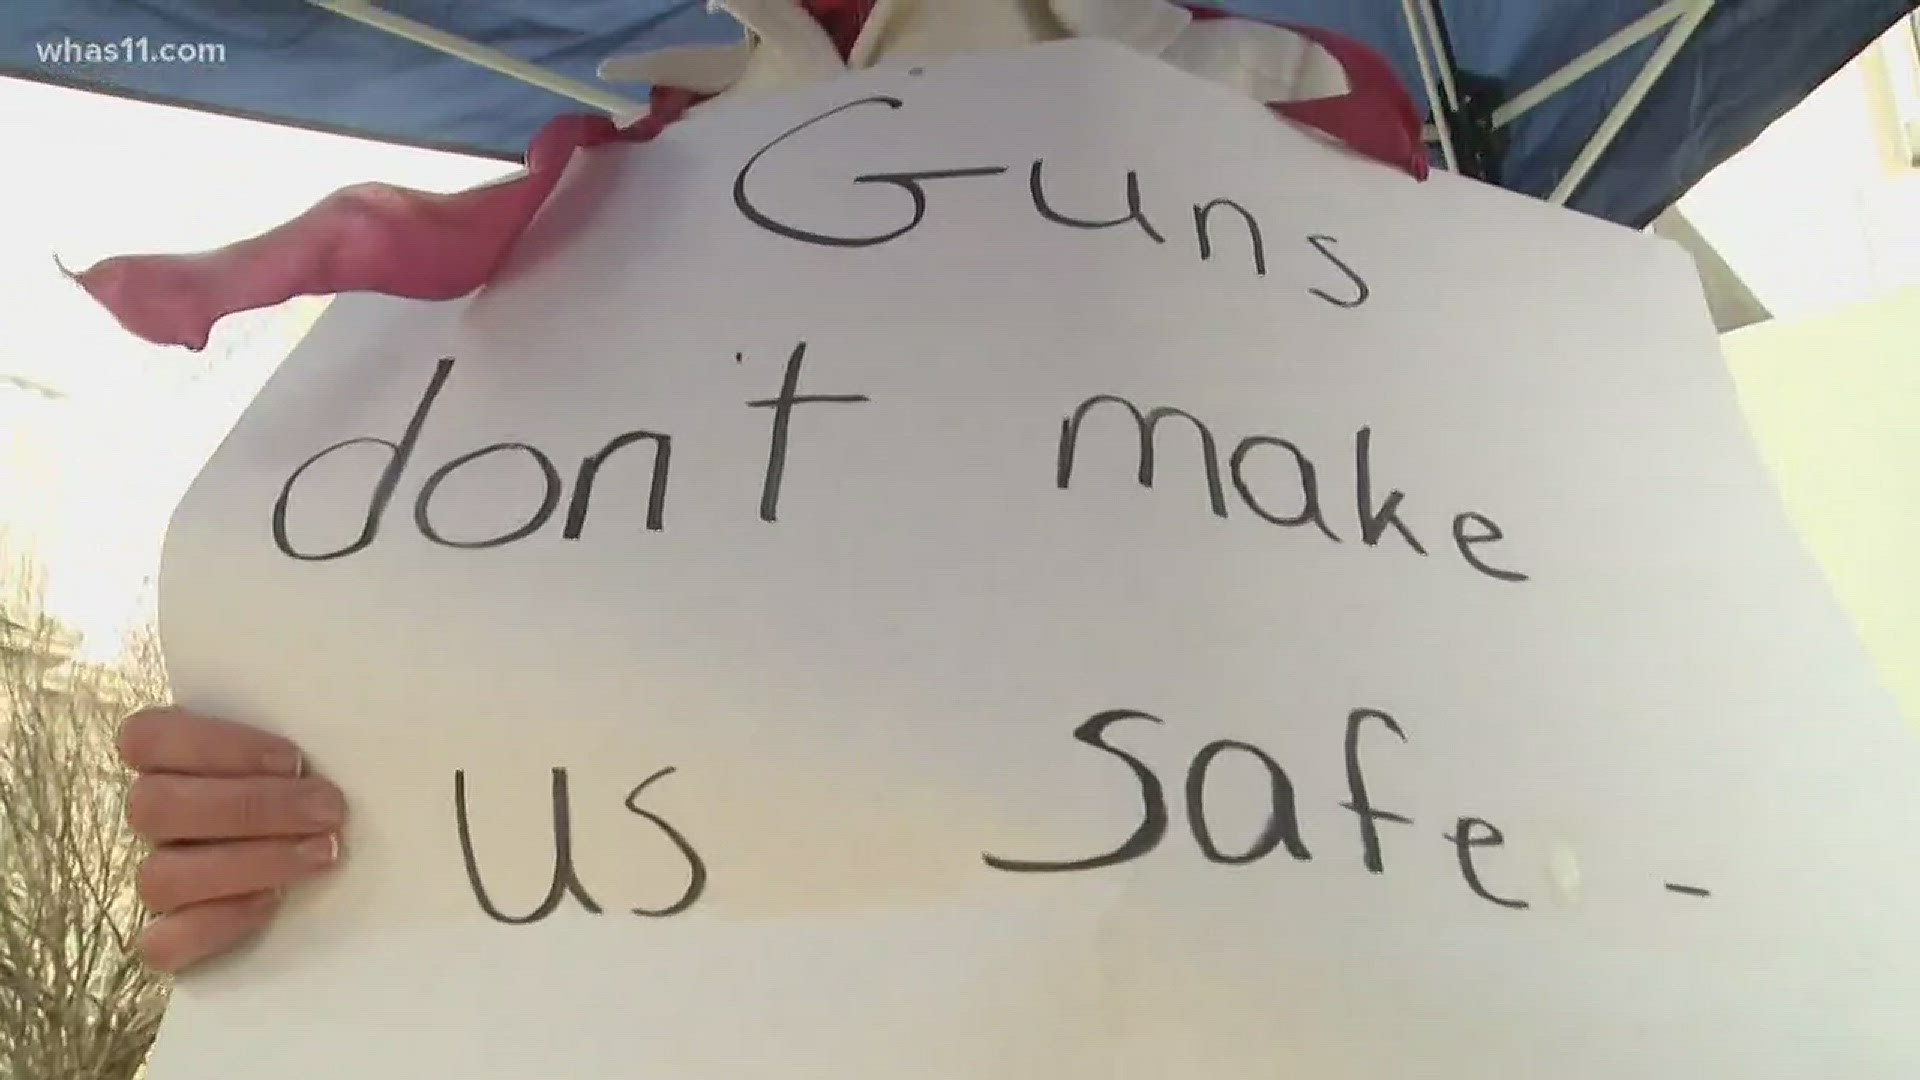 Teachers protest proposed gun laws